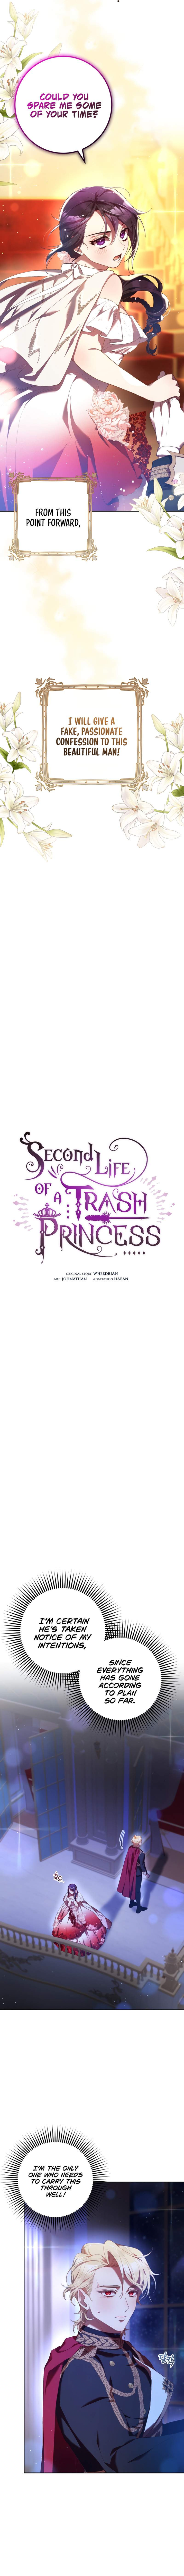 Second Life of a Trash Princess Chapter 37-eng-li - Page 5